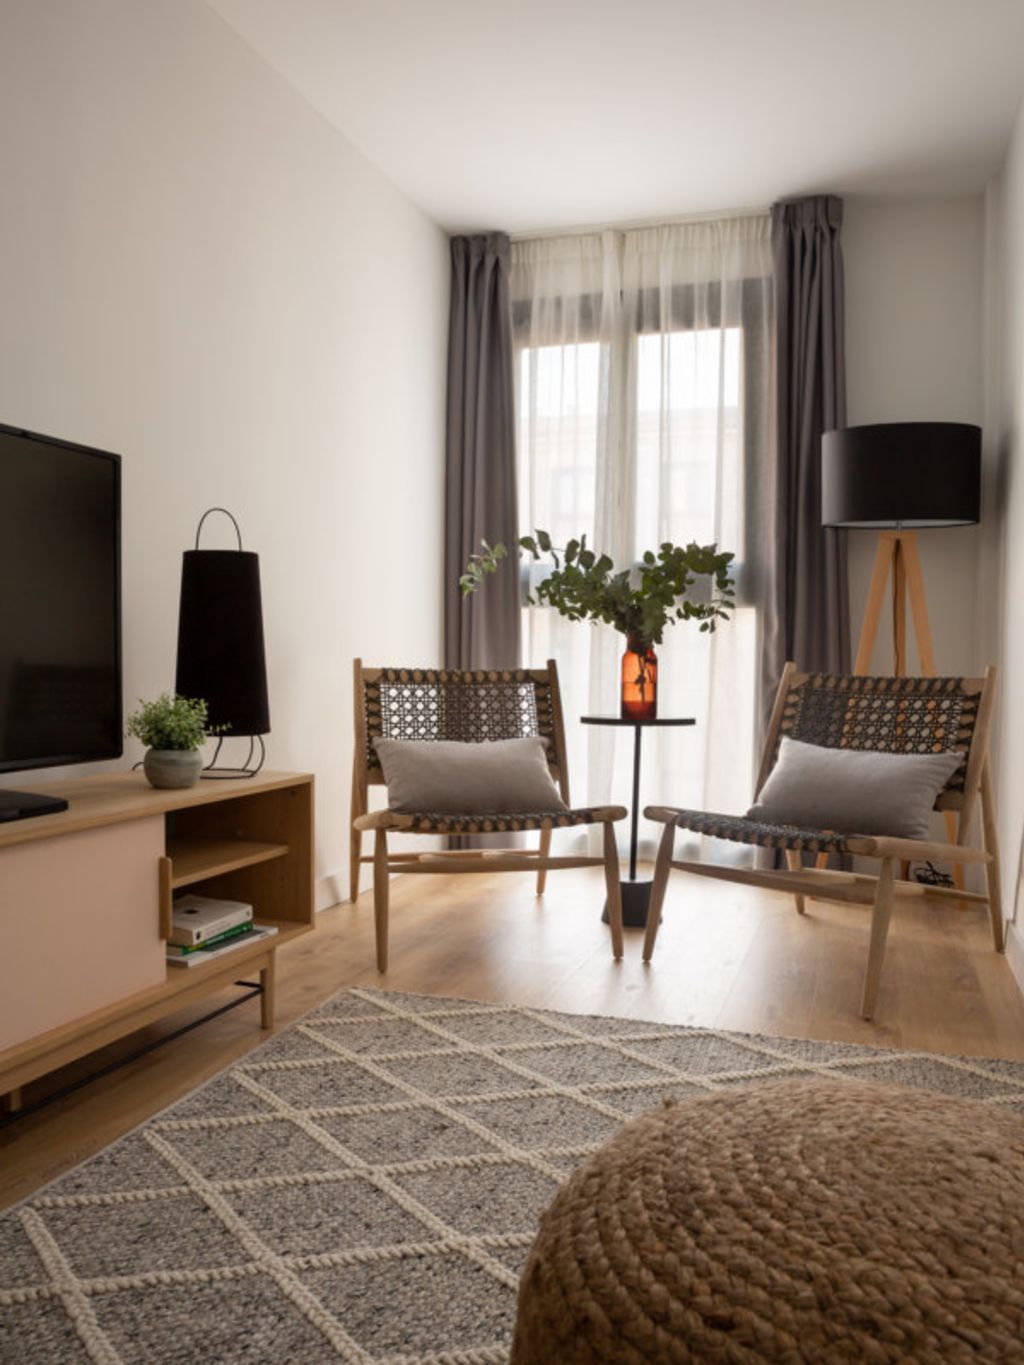 Incredible fully furnished flat - UBK-62504 - Incredible fully furnished flat